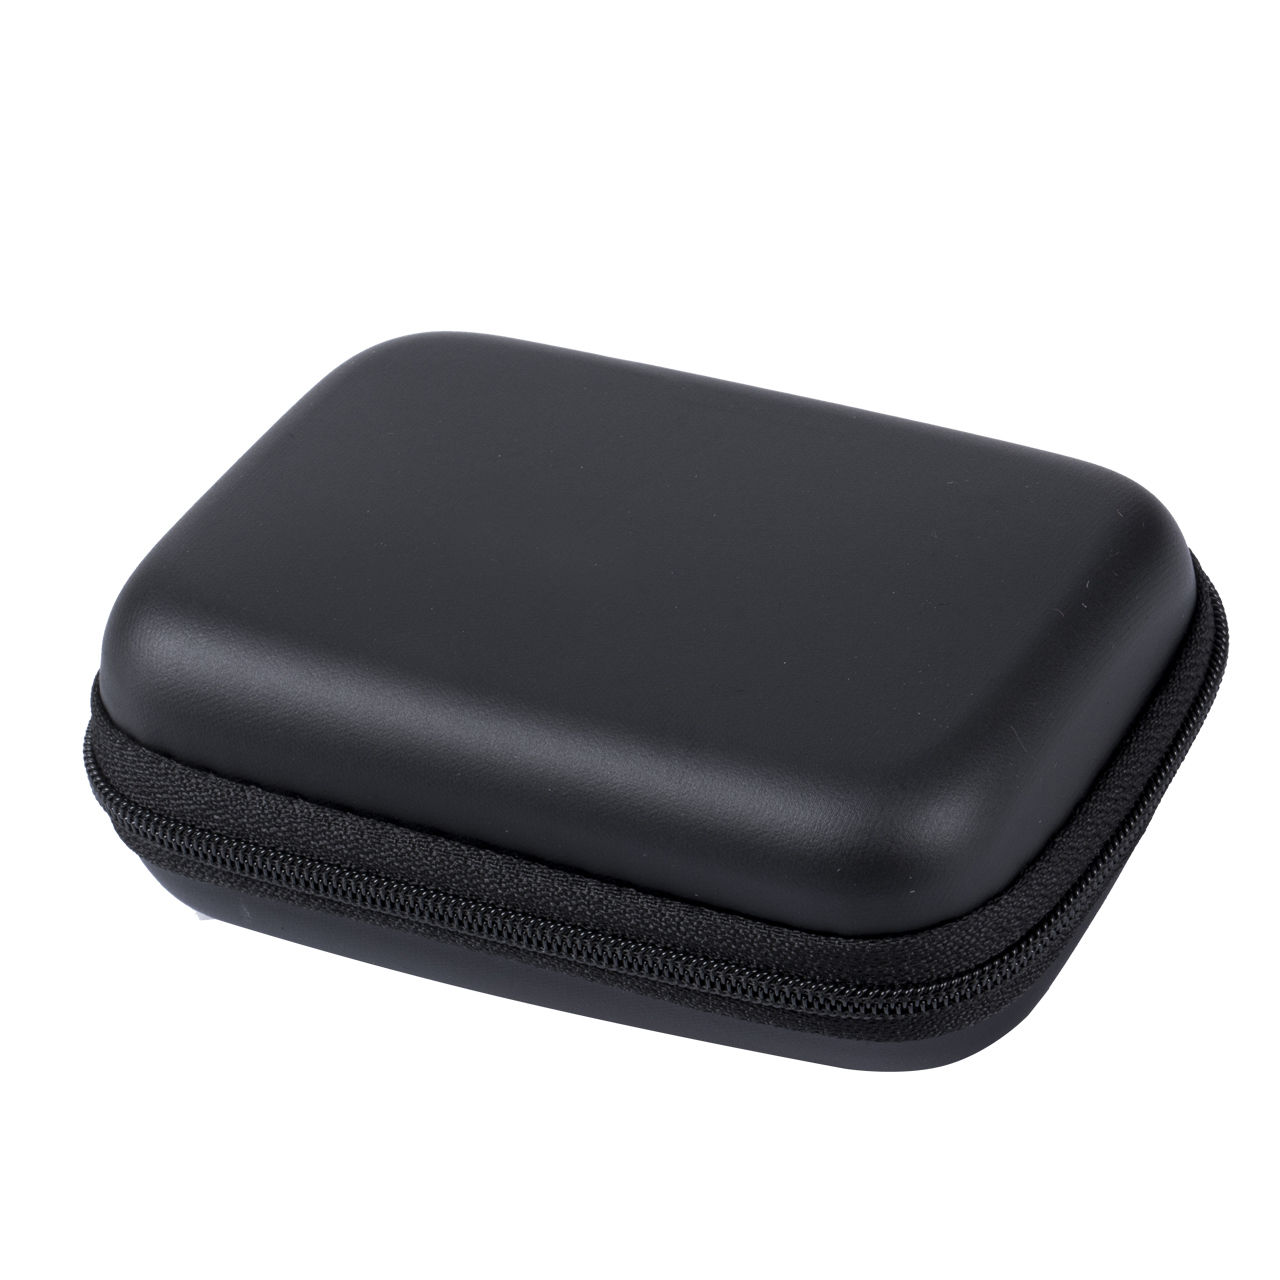 Reizen Digitale USB Opslag Draagbare Reizen Headset Oortelefoon Oordopjes Kabel Storage Bag Hard Case Box: Black